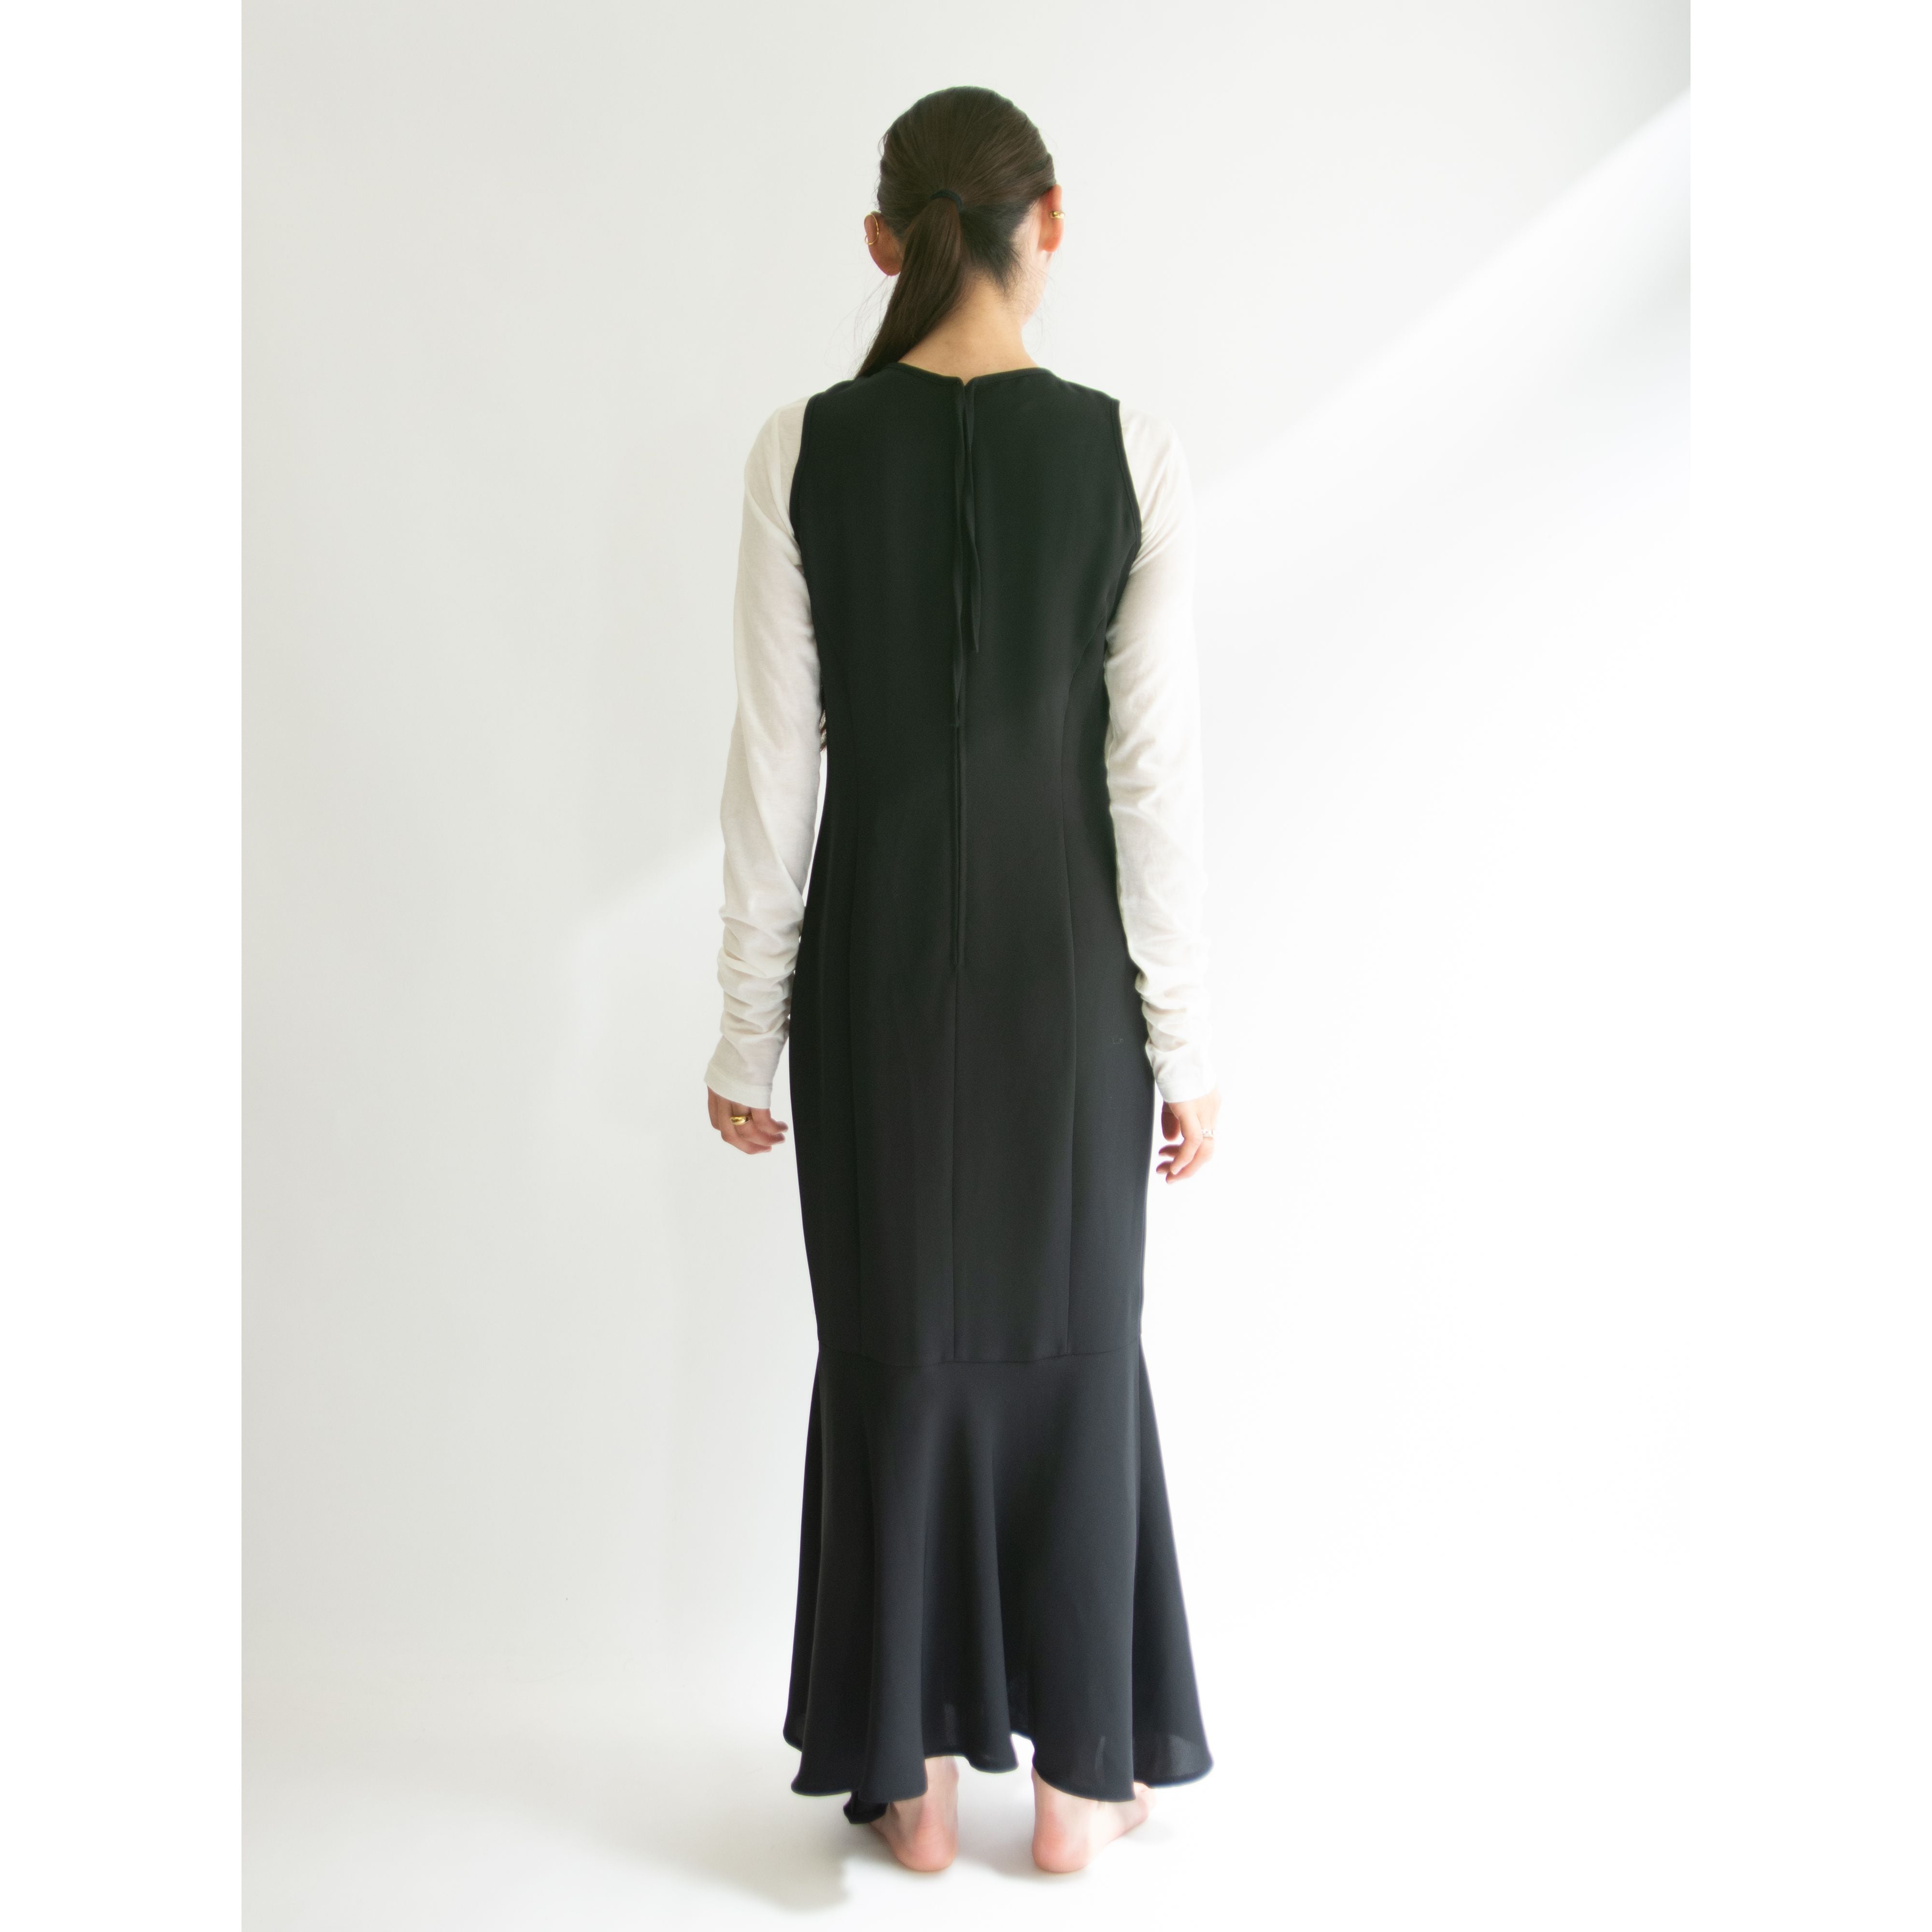 mantani donna】Made in Italy Polyester-Viscose Sleeveless Dress ...